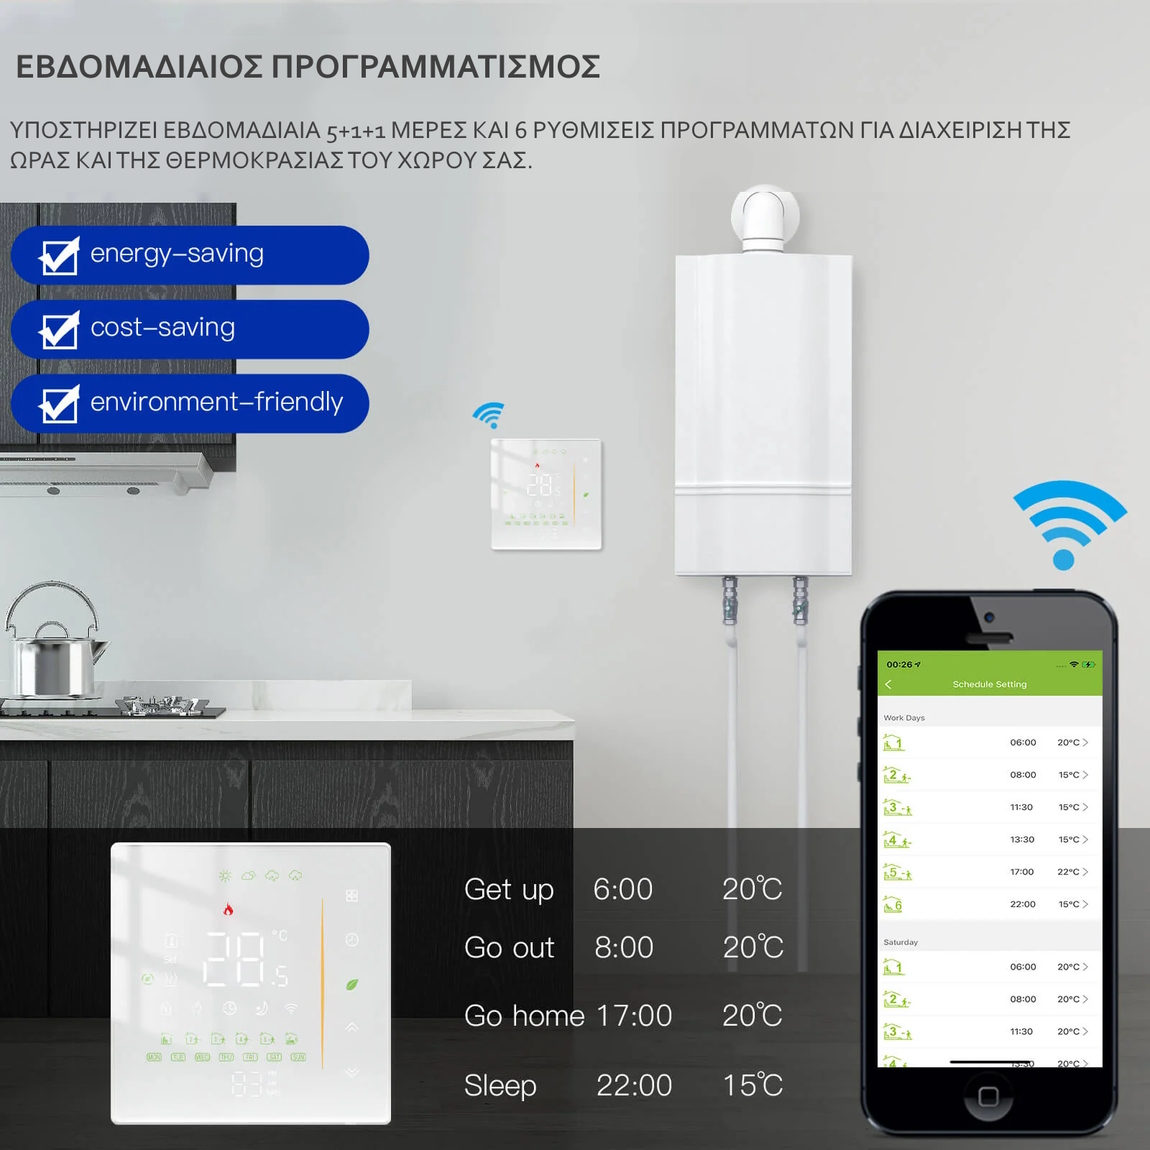 MOES WiFi Έξυπνος Προγραμματιζόμενος Θερμοστάτης για Λέβητα Αερίου με εβδομαδιαίο προγραμματισμό